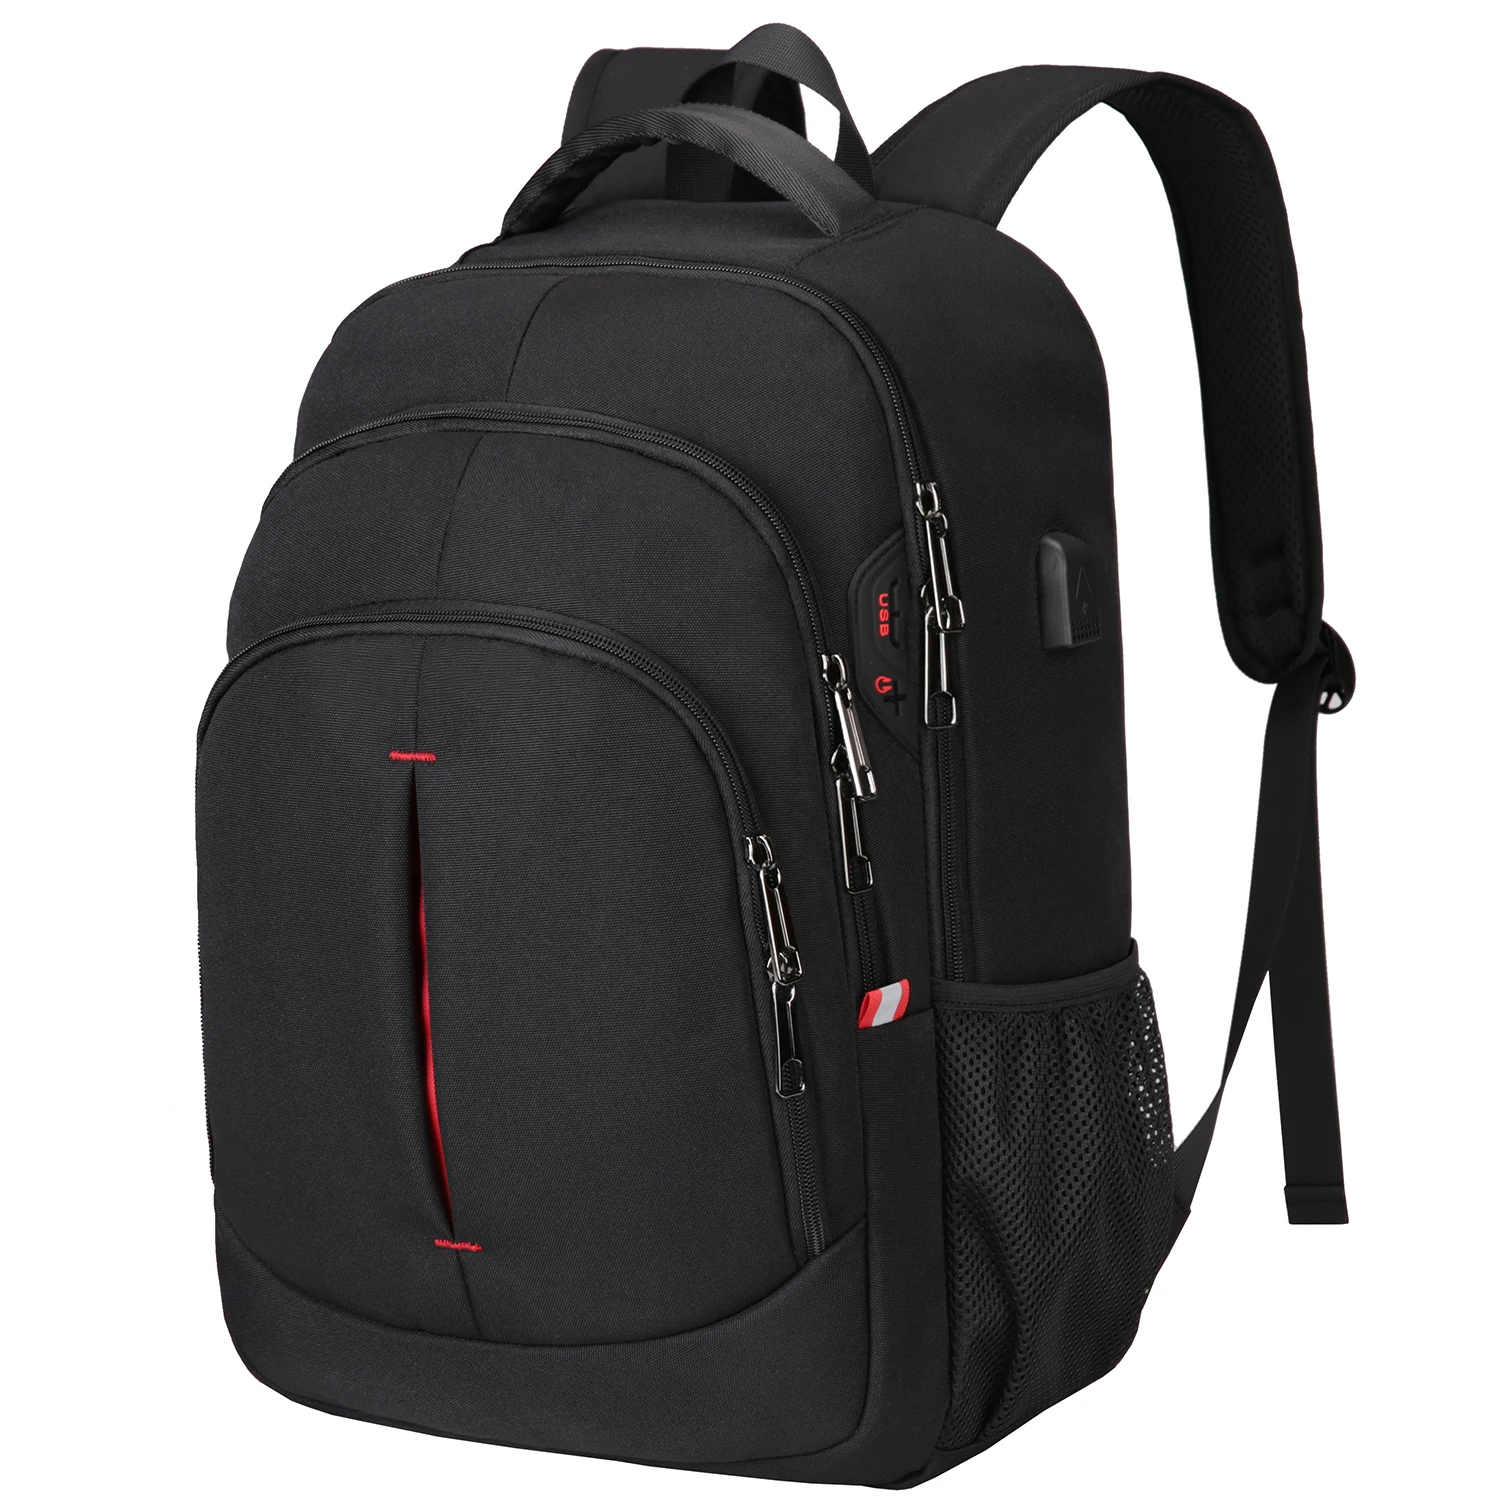 

2020 Trending High Quality Cheap OEM ODM Bag Backpack for Business Travel Anti theft Lightweight Bookbags School Backpacks, Black